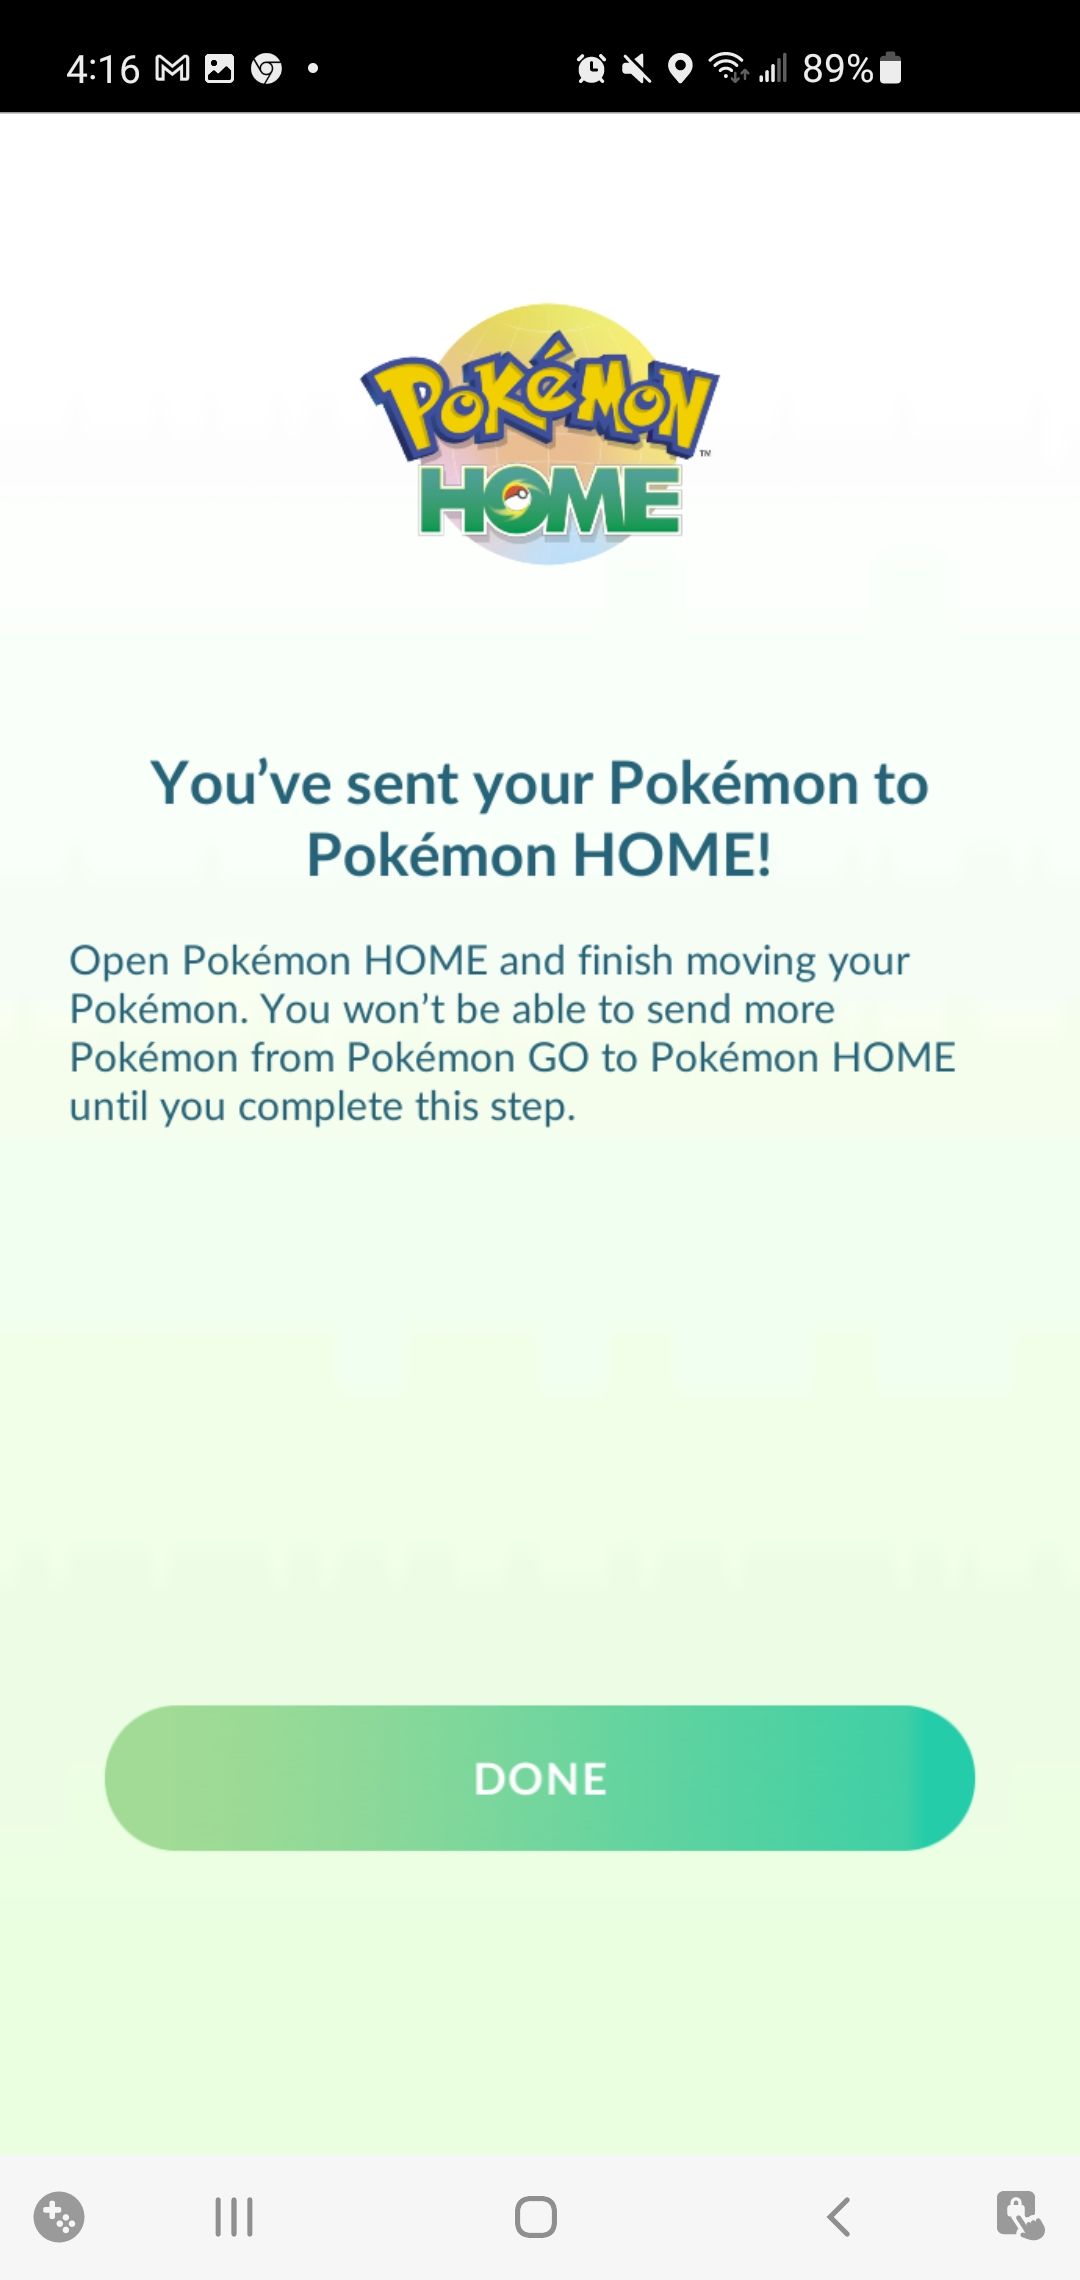 Tangkapan layar menunjukkan langkah transfer terakhir sebelum selesai di Pokemon Go